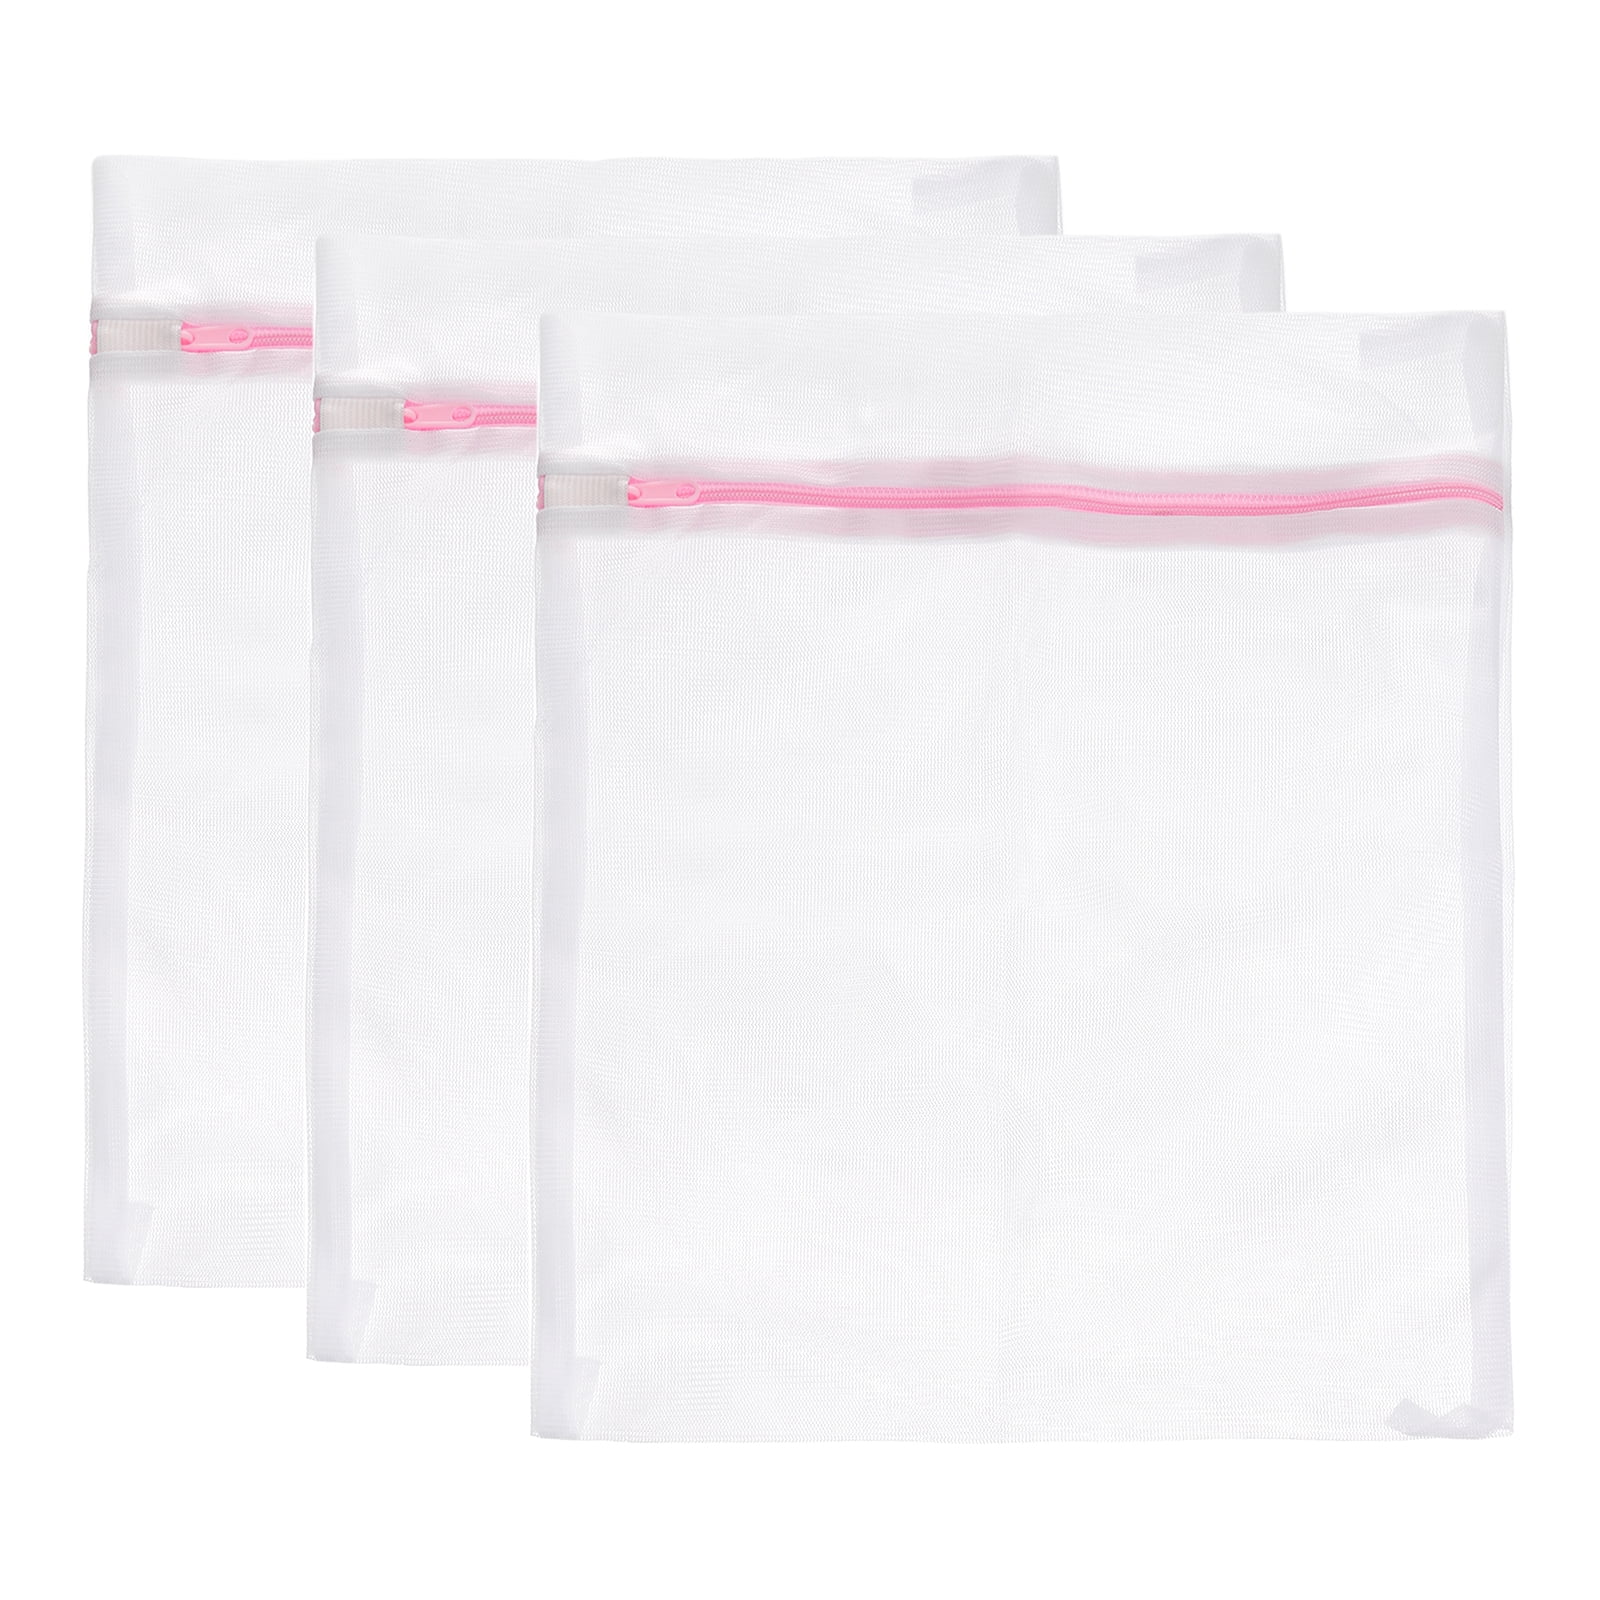 3Pcs Mesh Laundry Bags for Delicates and Lingerie - Fine Mesh - 2 Large & 1  Medium Laundry Wash Bag for Washing Machine, Socks, Underwear, Panties